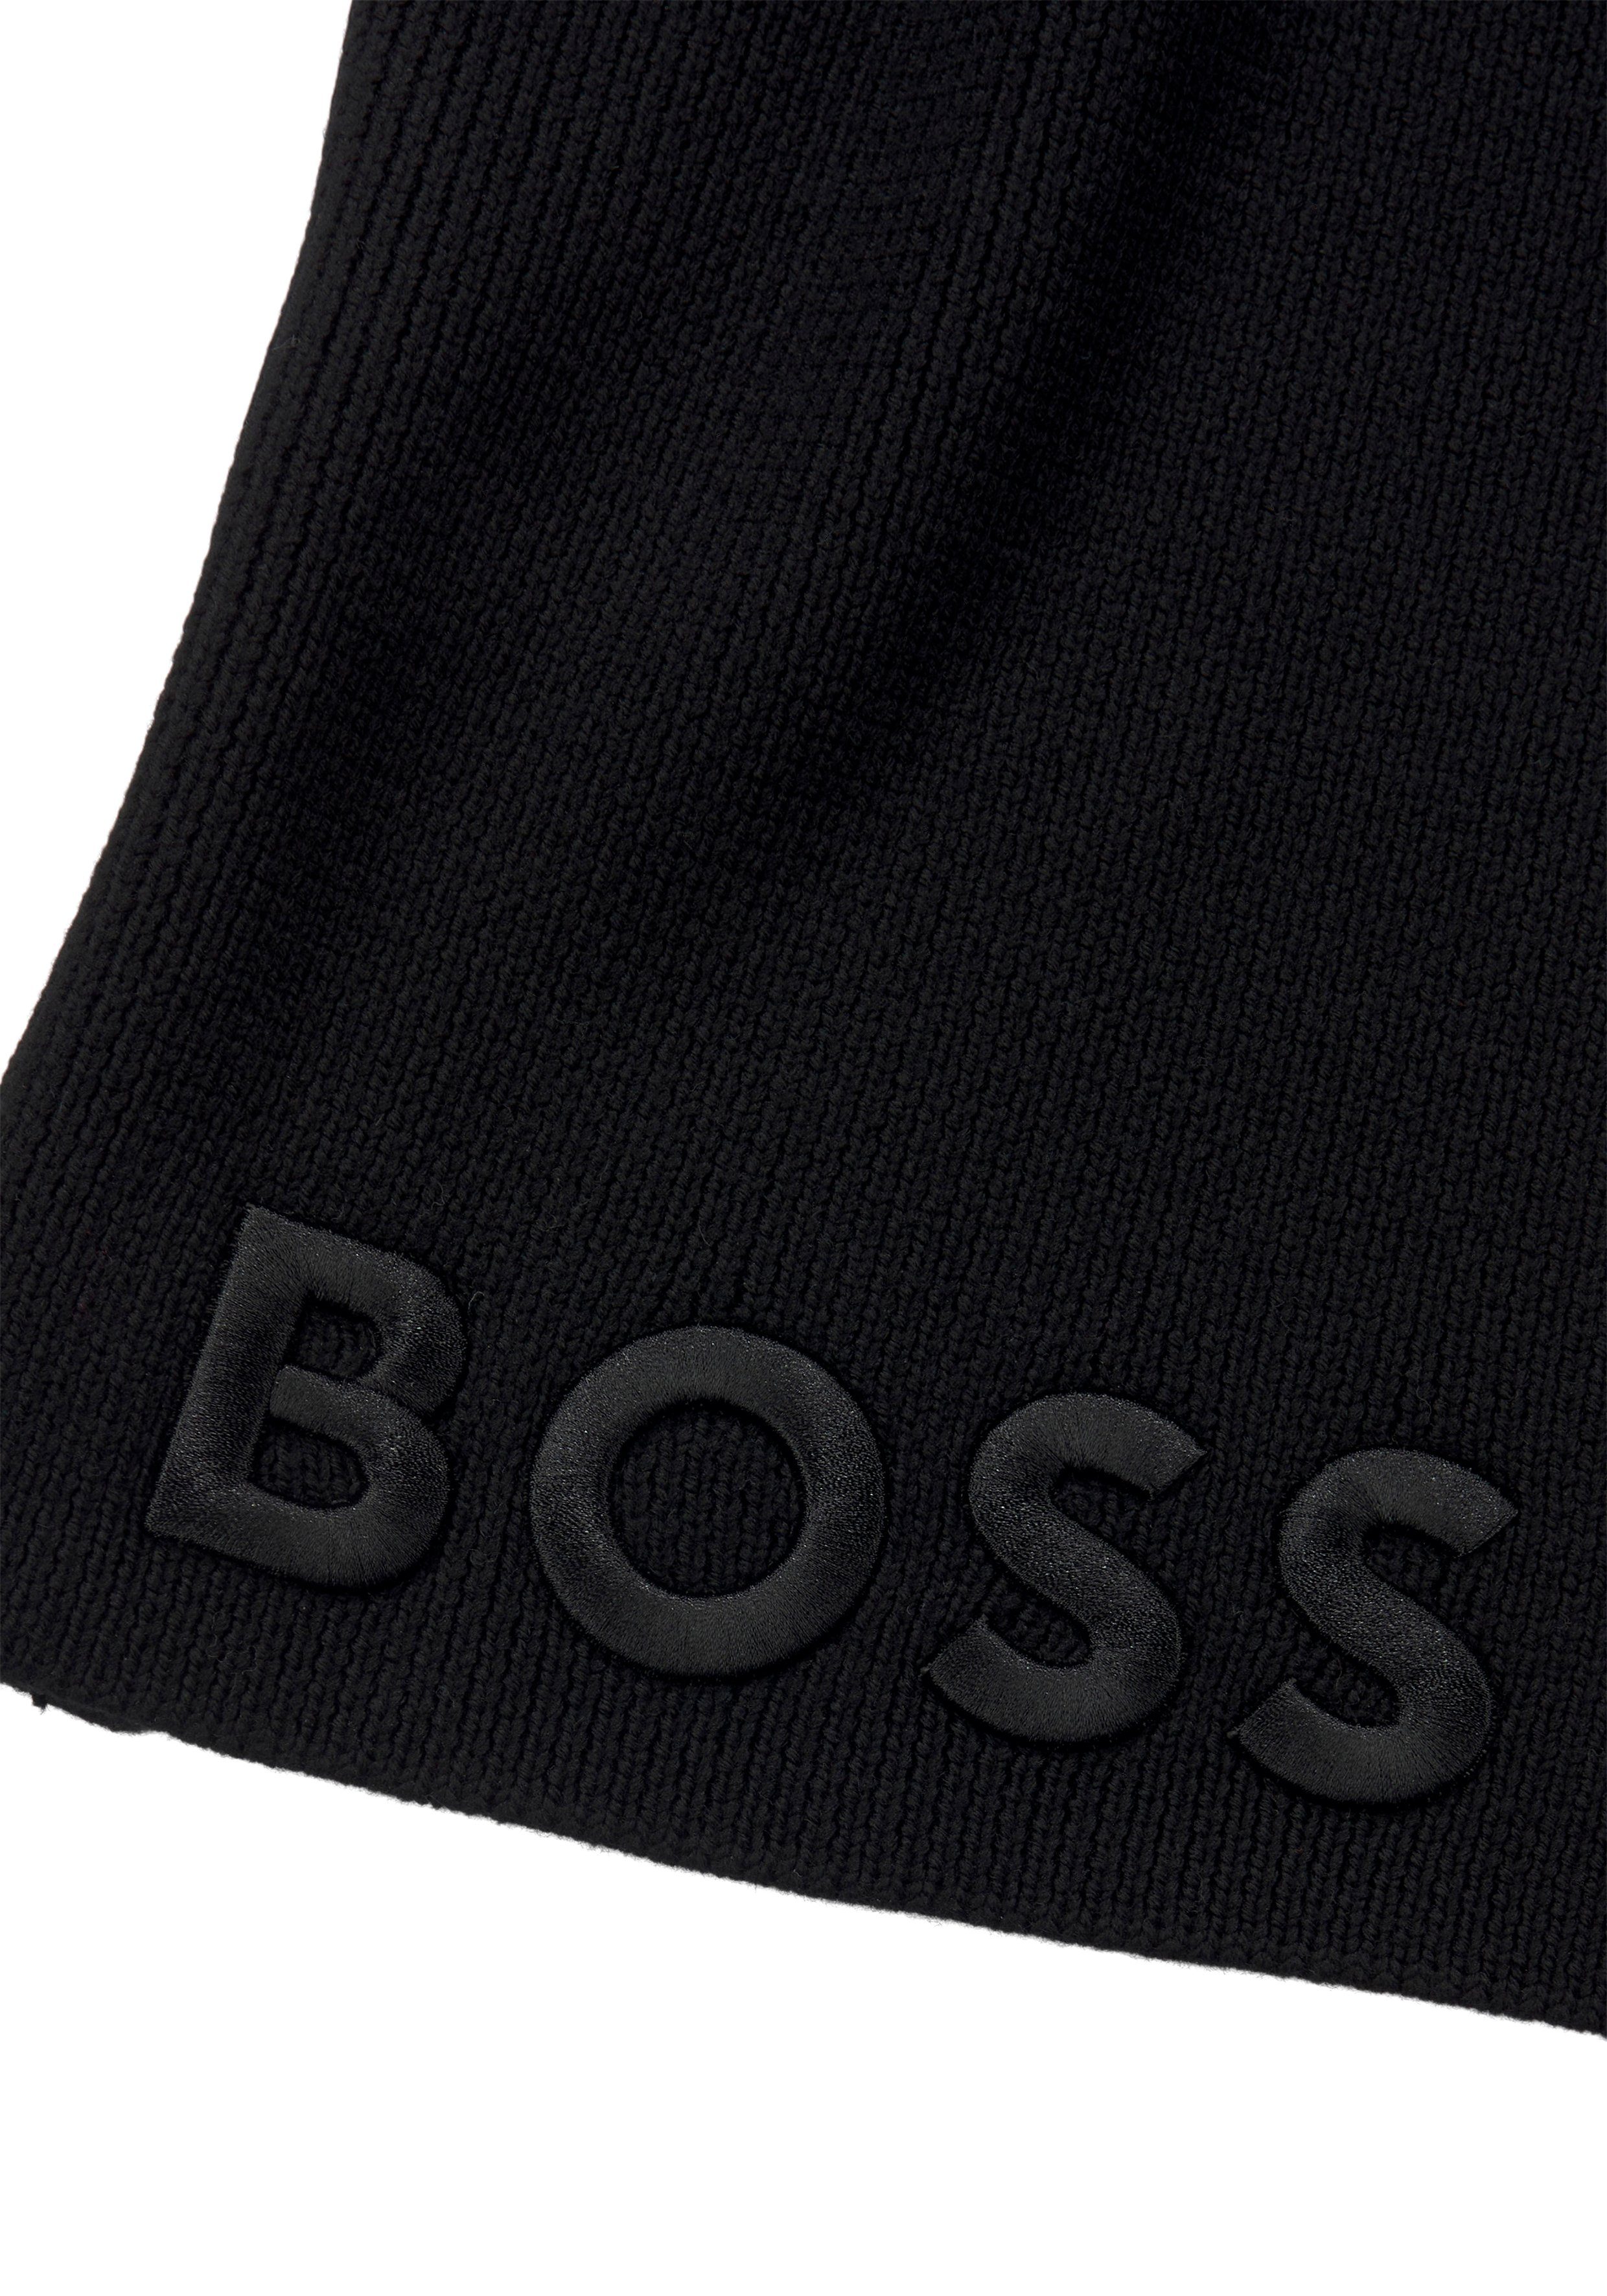 BOSS Schal Black Logo-Stickerei tonaler mit Lara_scarf, BOSS